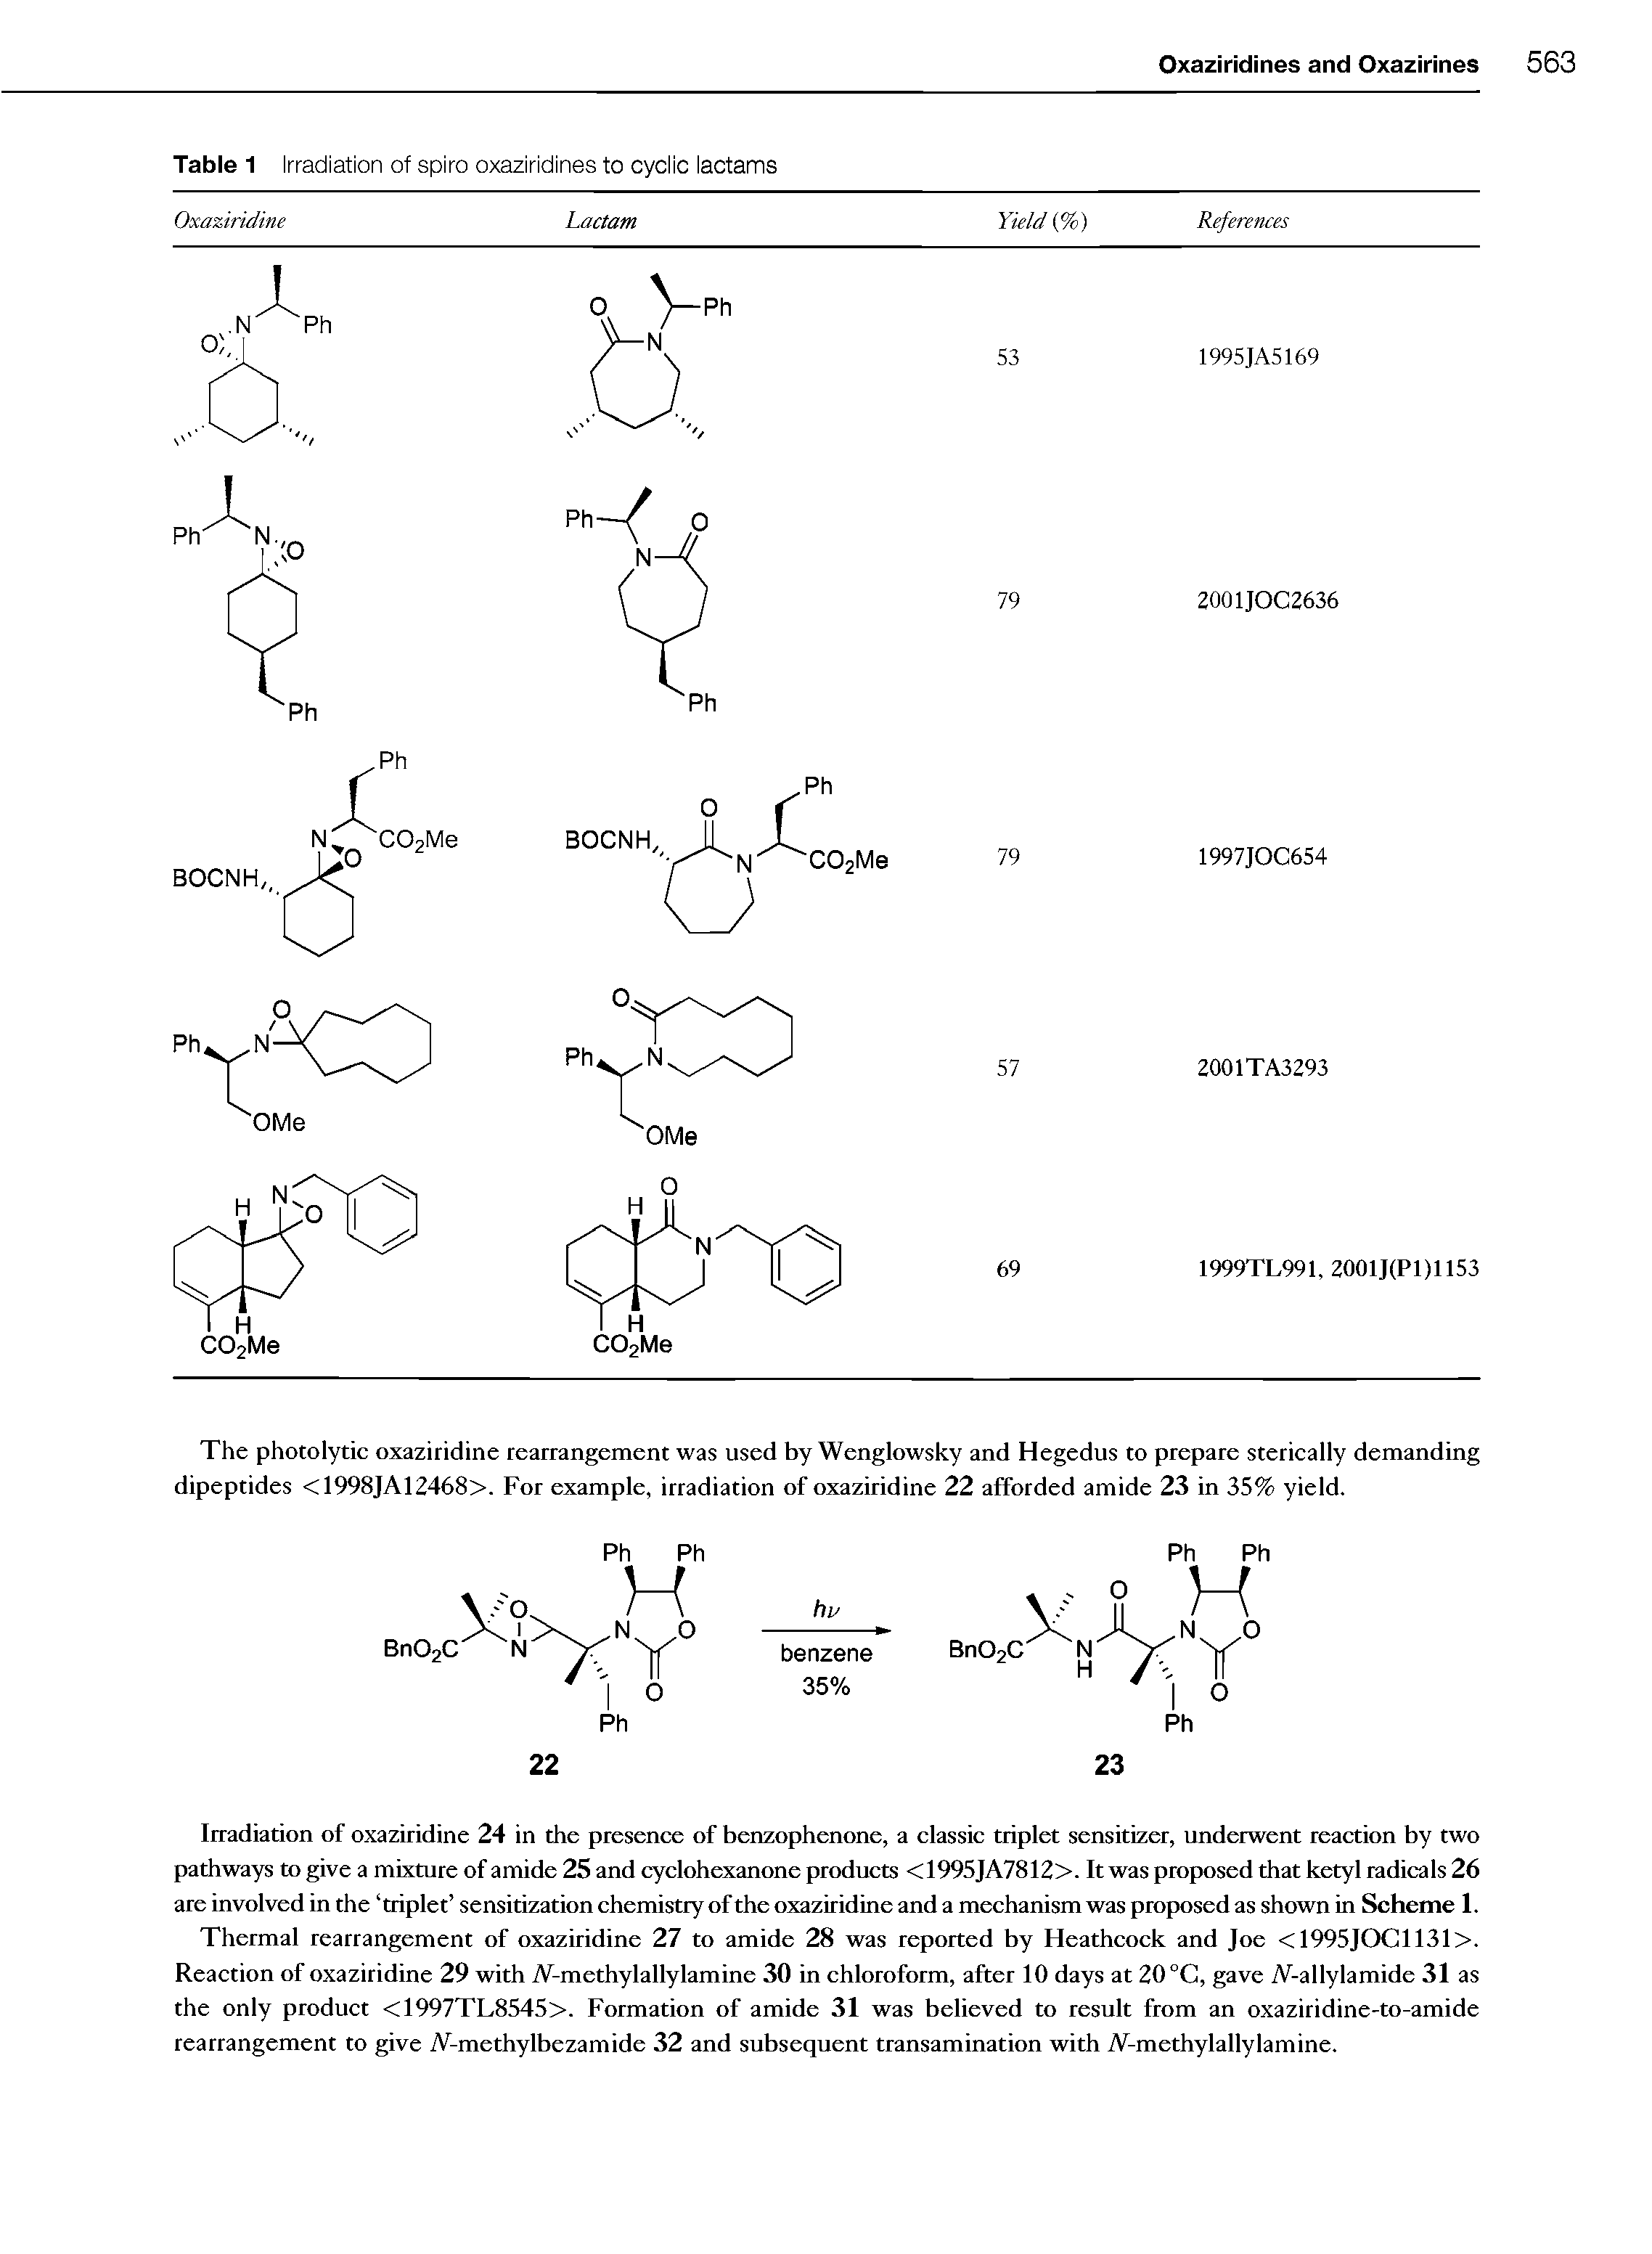 Table 1 Irradiation of spiro oxaziridines to cyclic lactams...